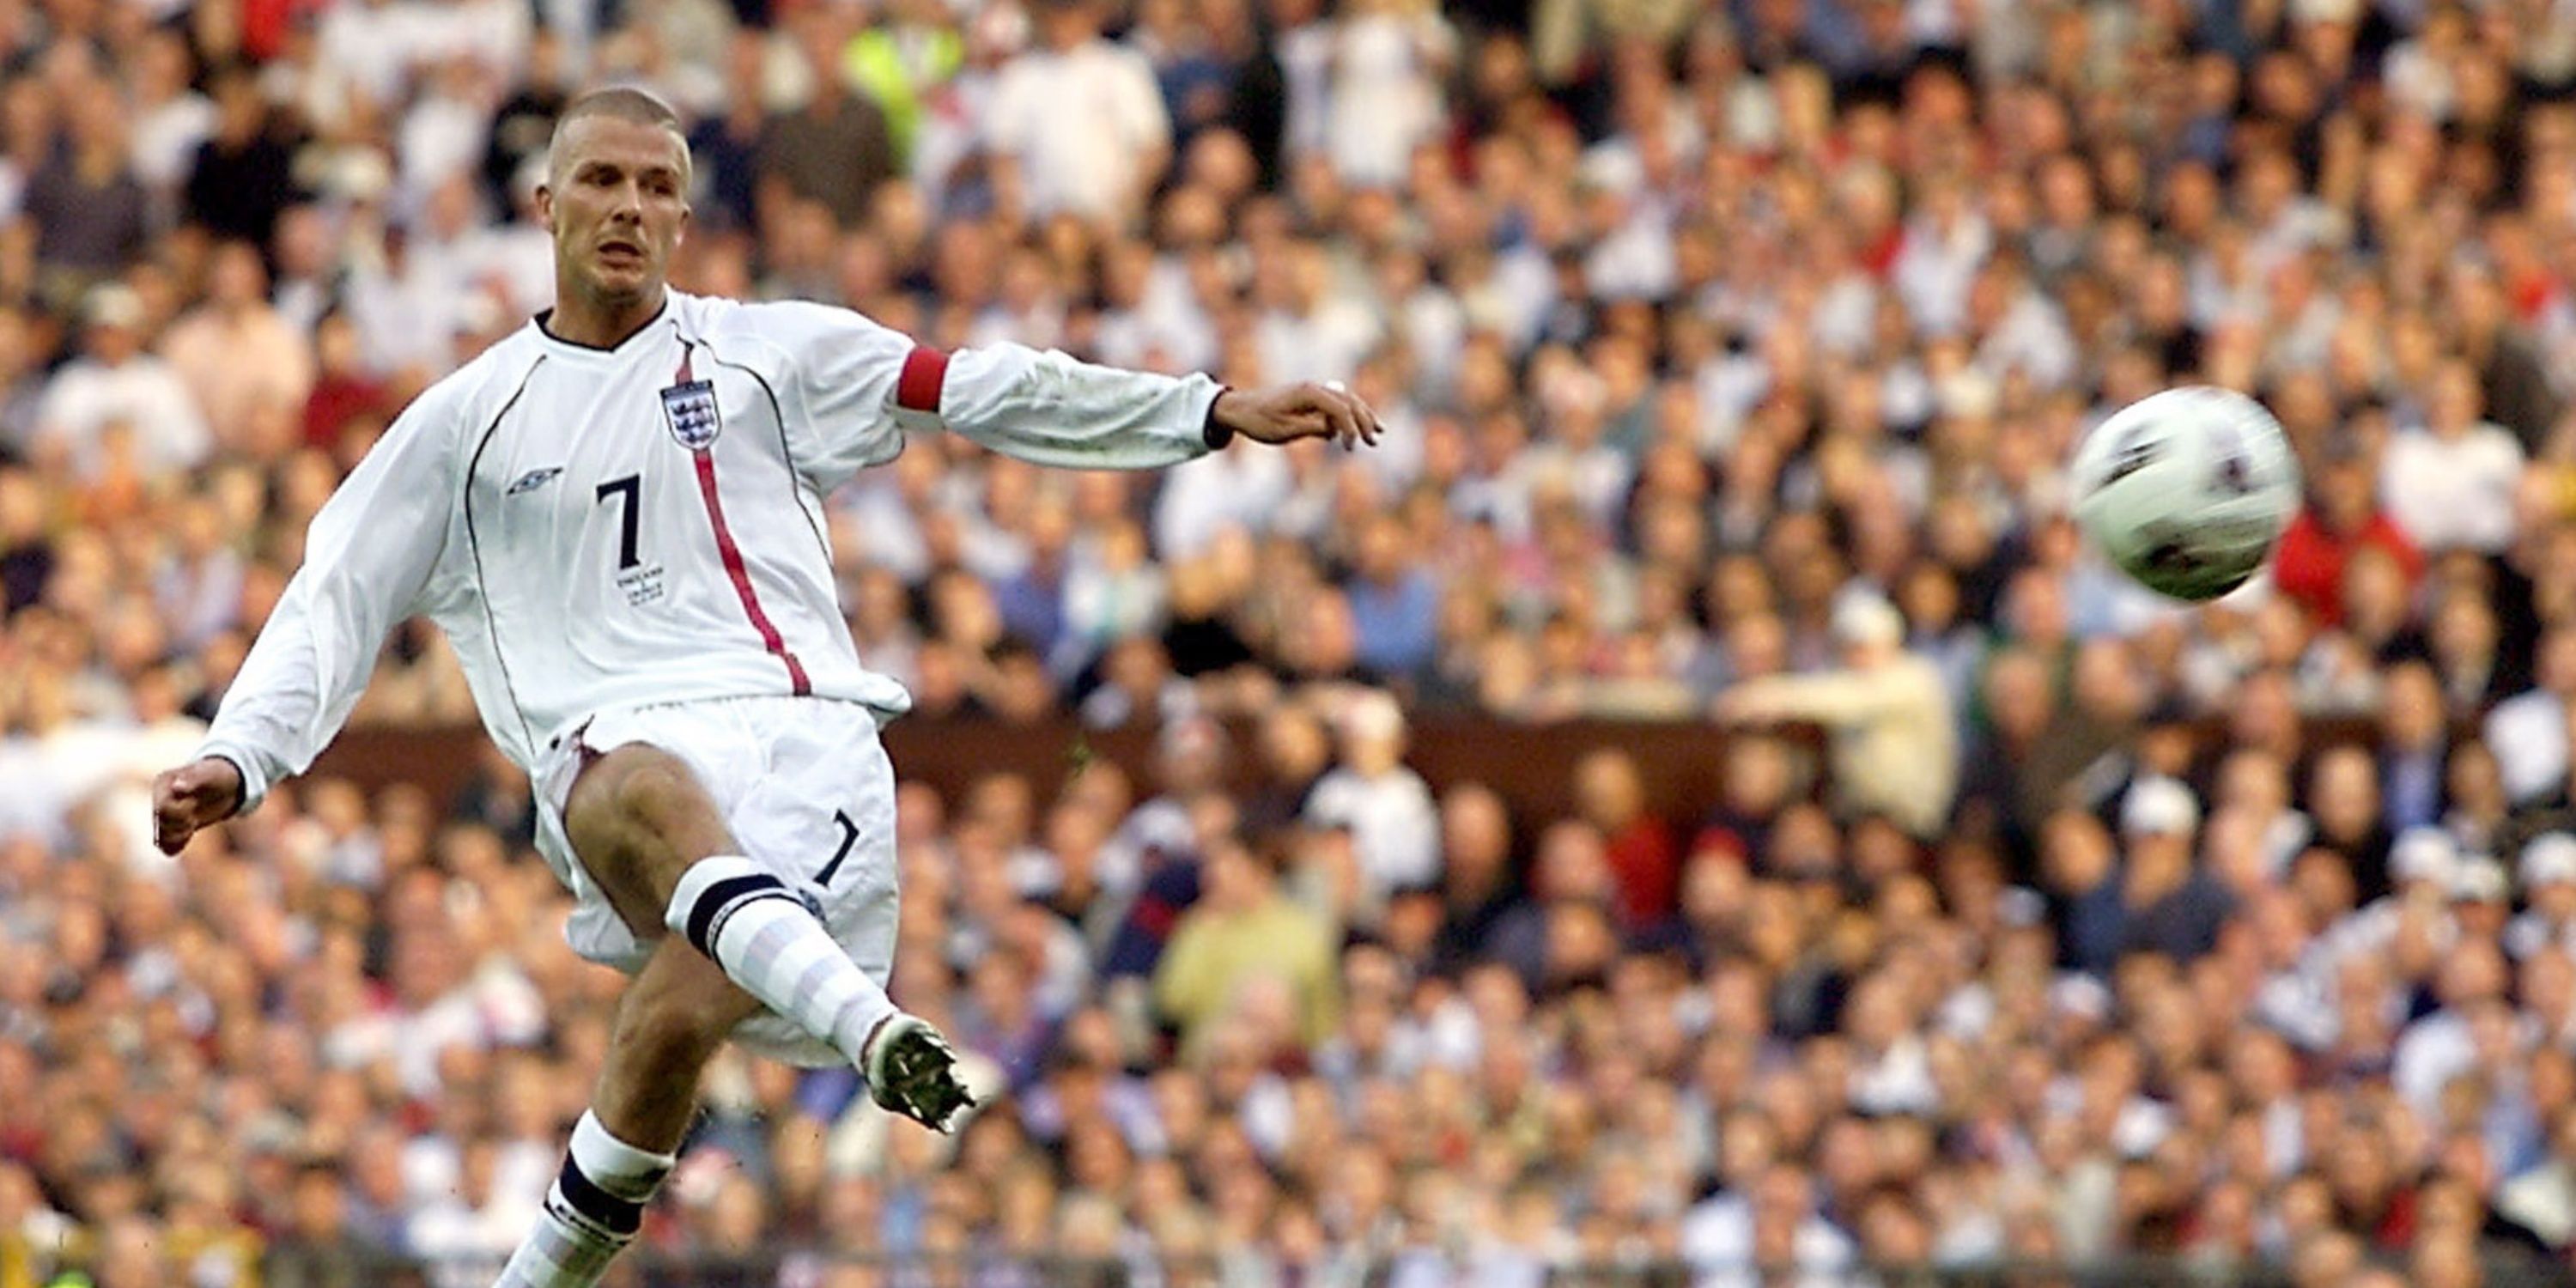 England's David Beckham